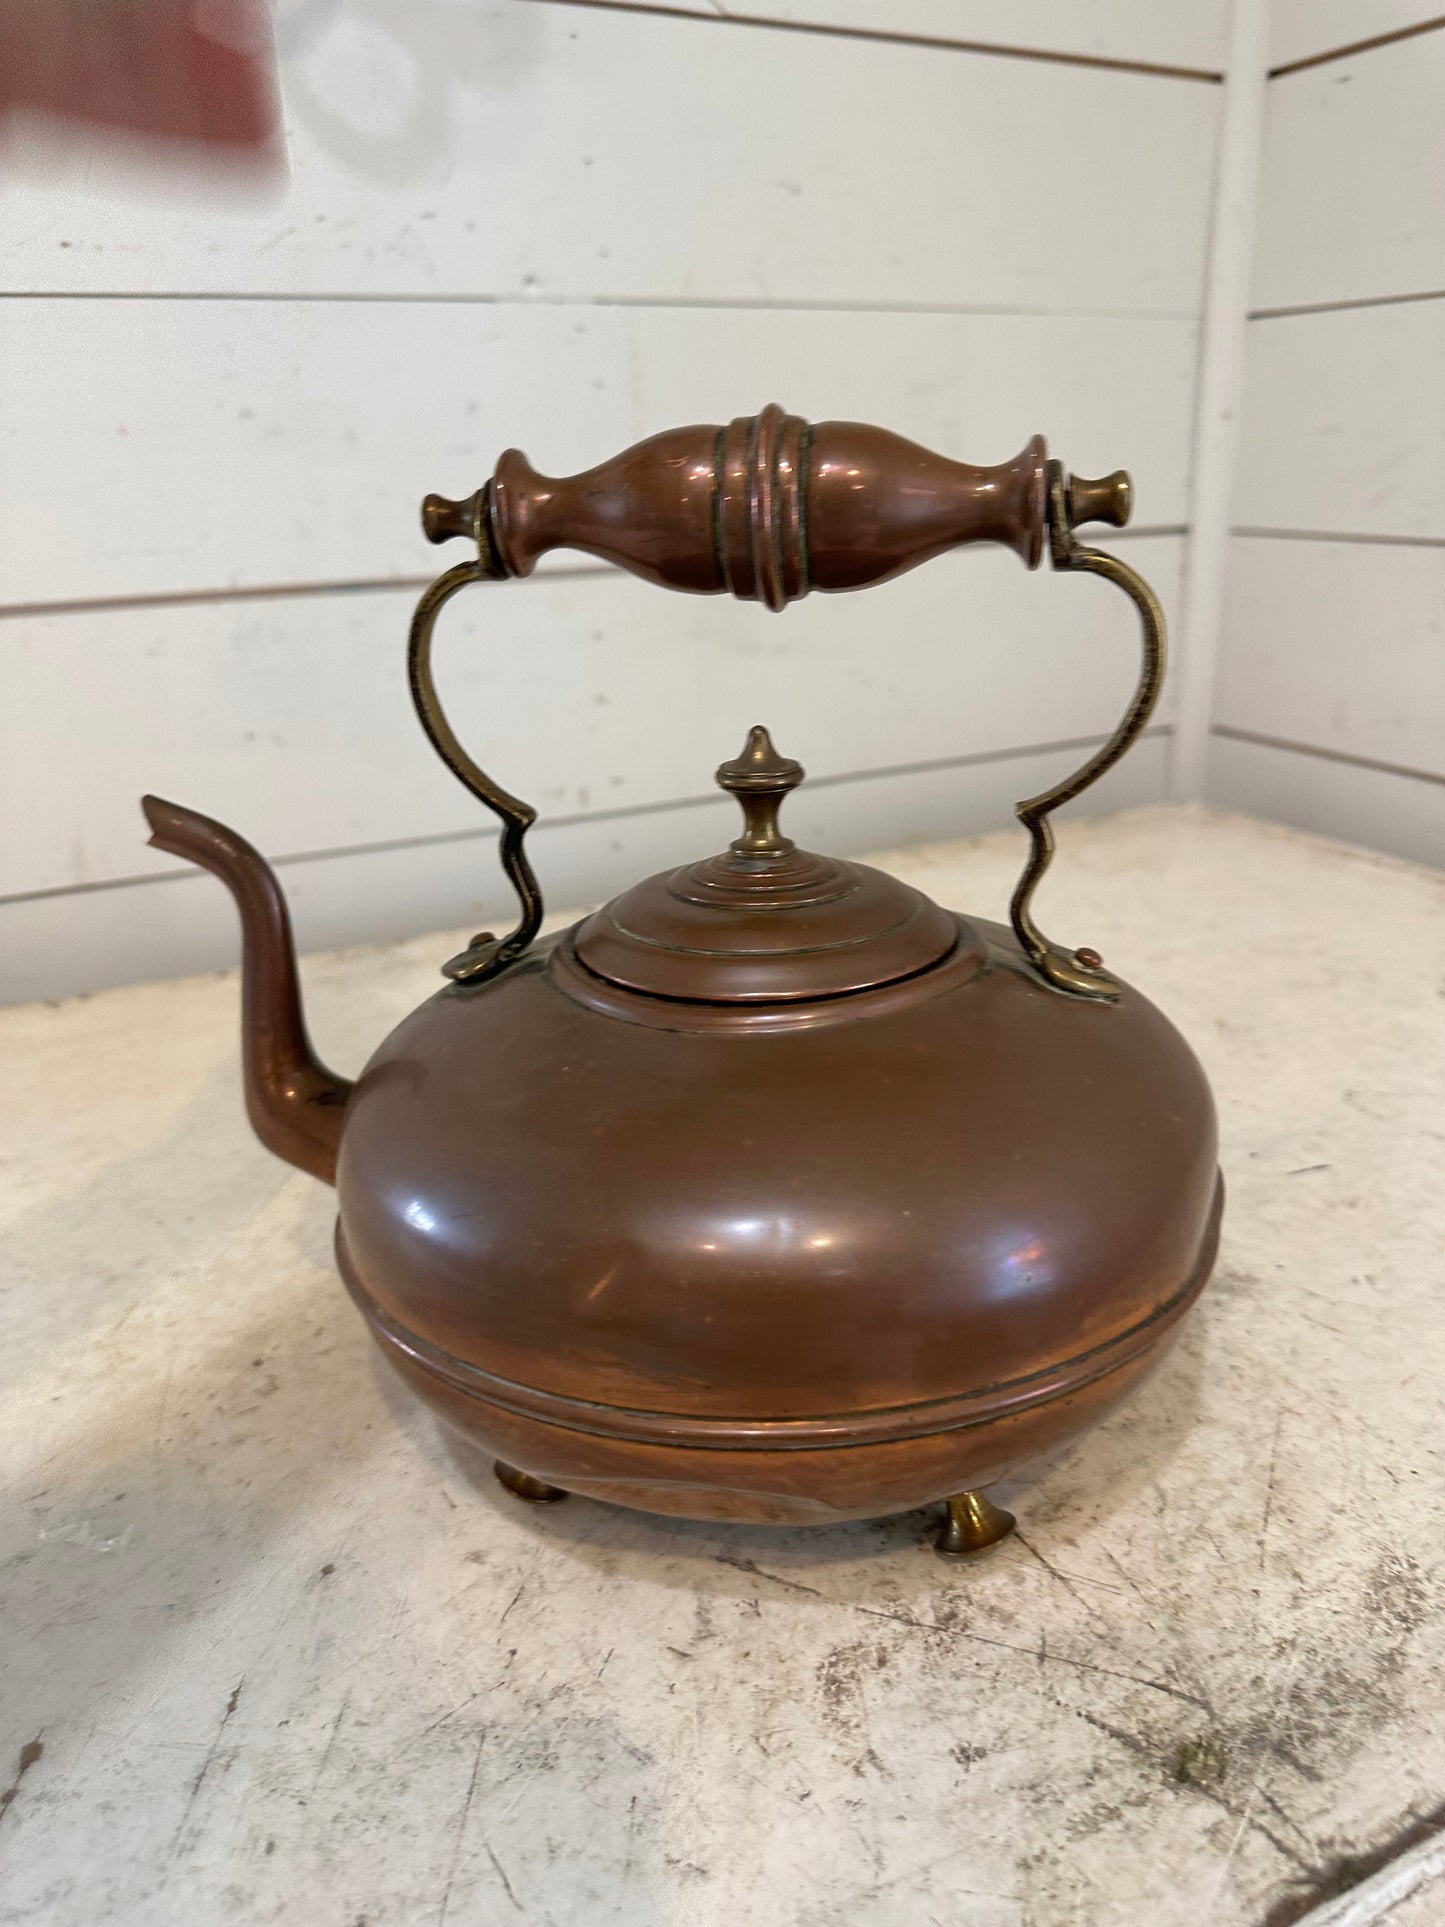 Antique Vintage Majestic Gooseneck Copper Teapot Kettle with feet